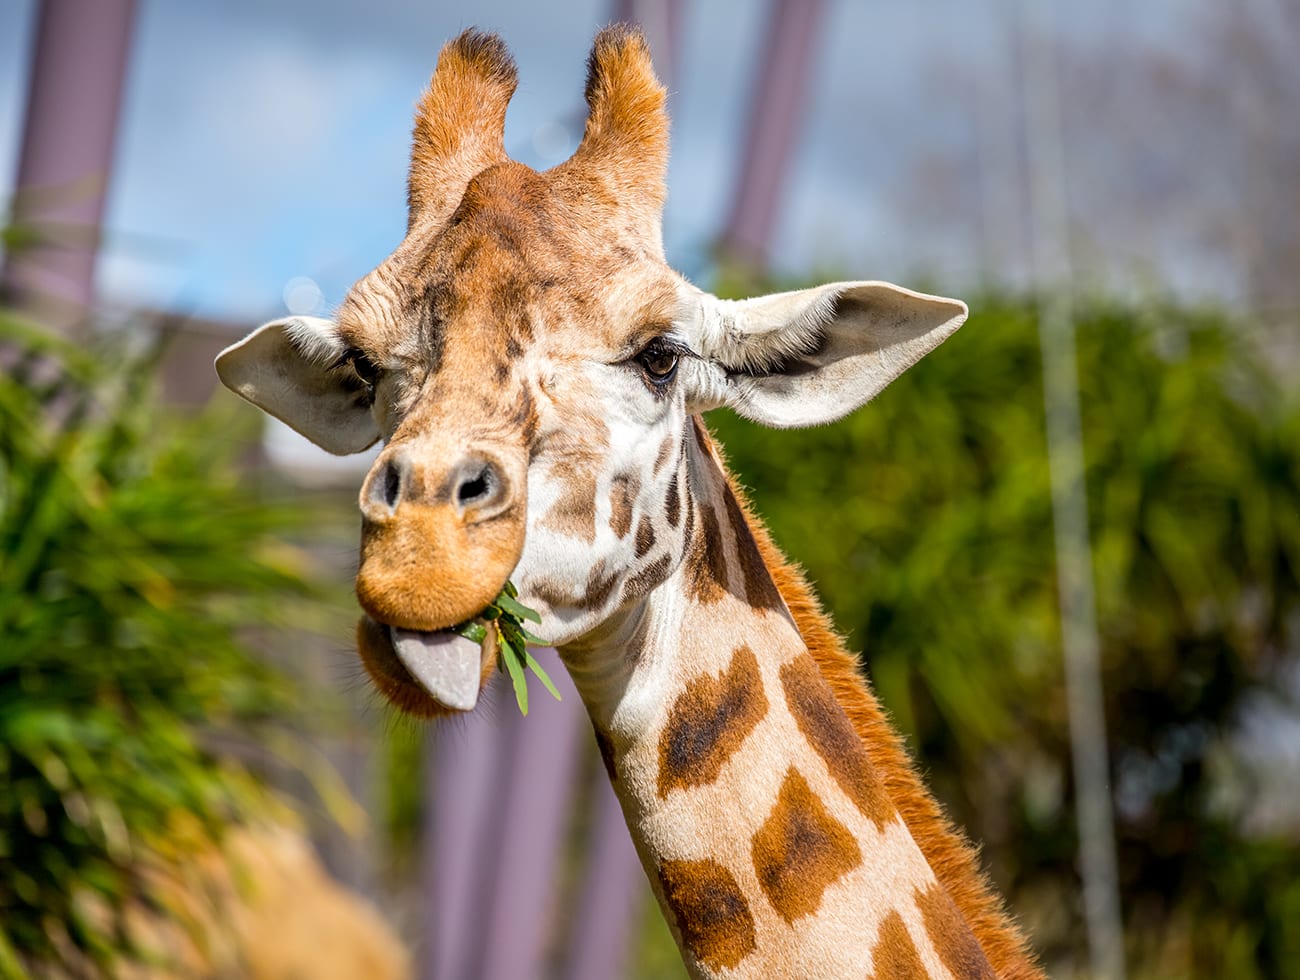 Giraffe at Auckand Zoo in New Zealand